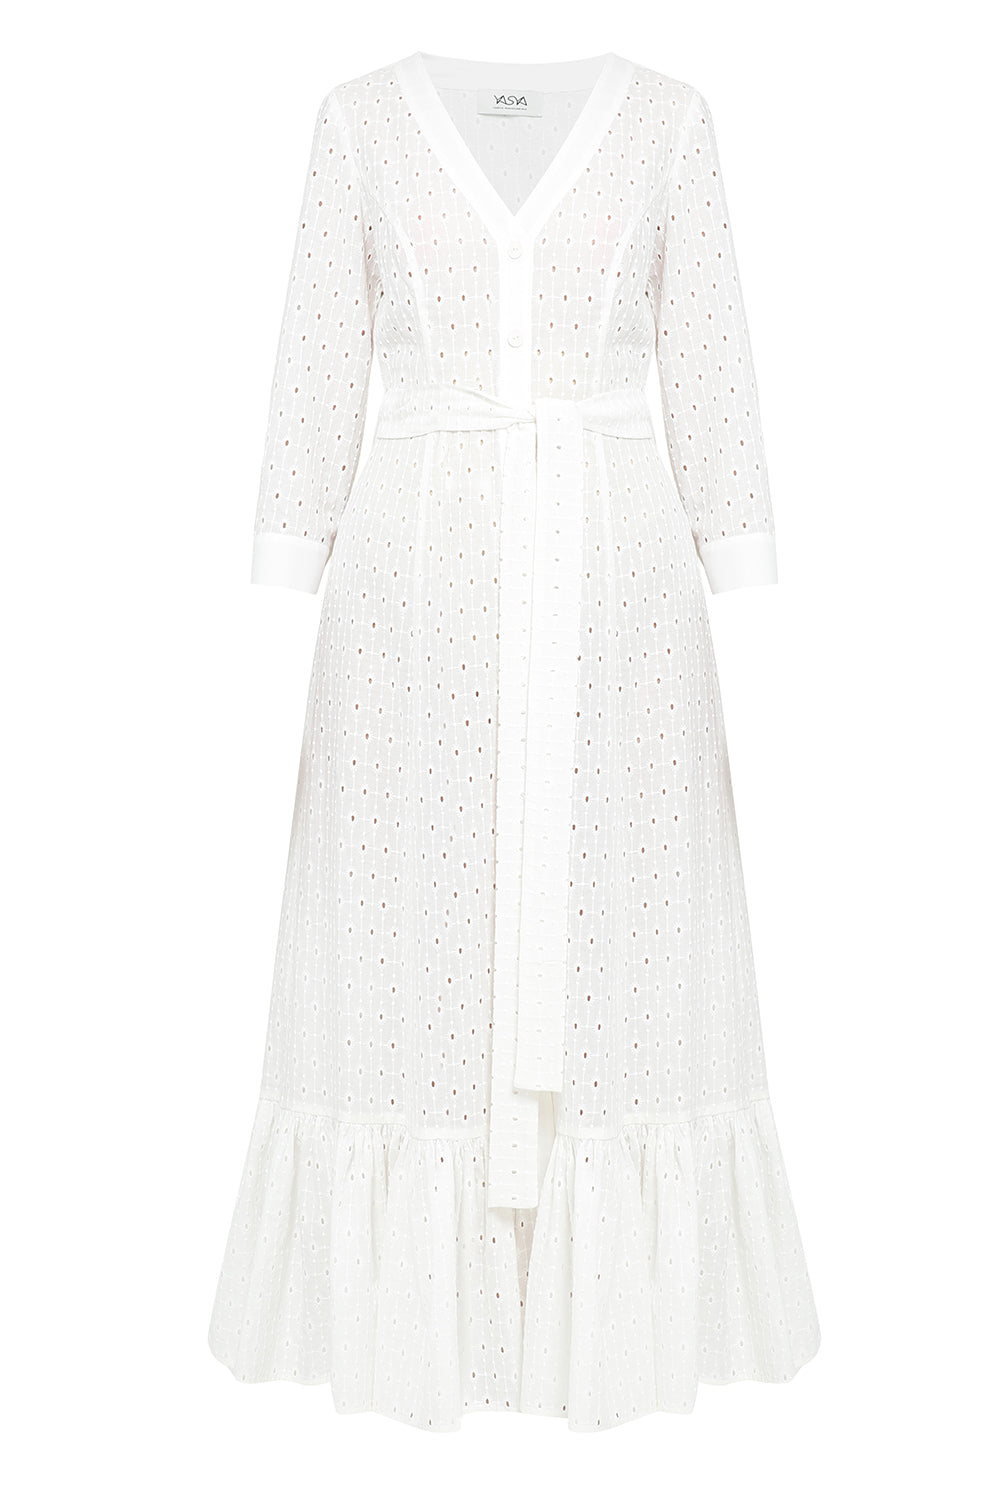 Beatrice 2 White Cotton Midi Shirt Dress